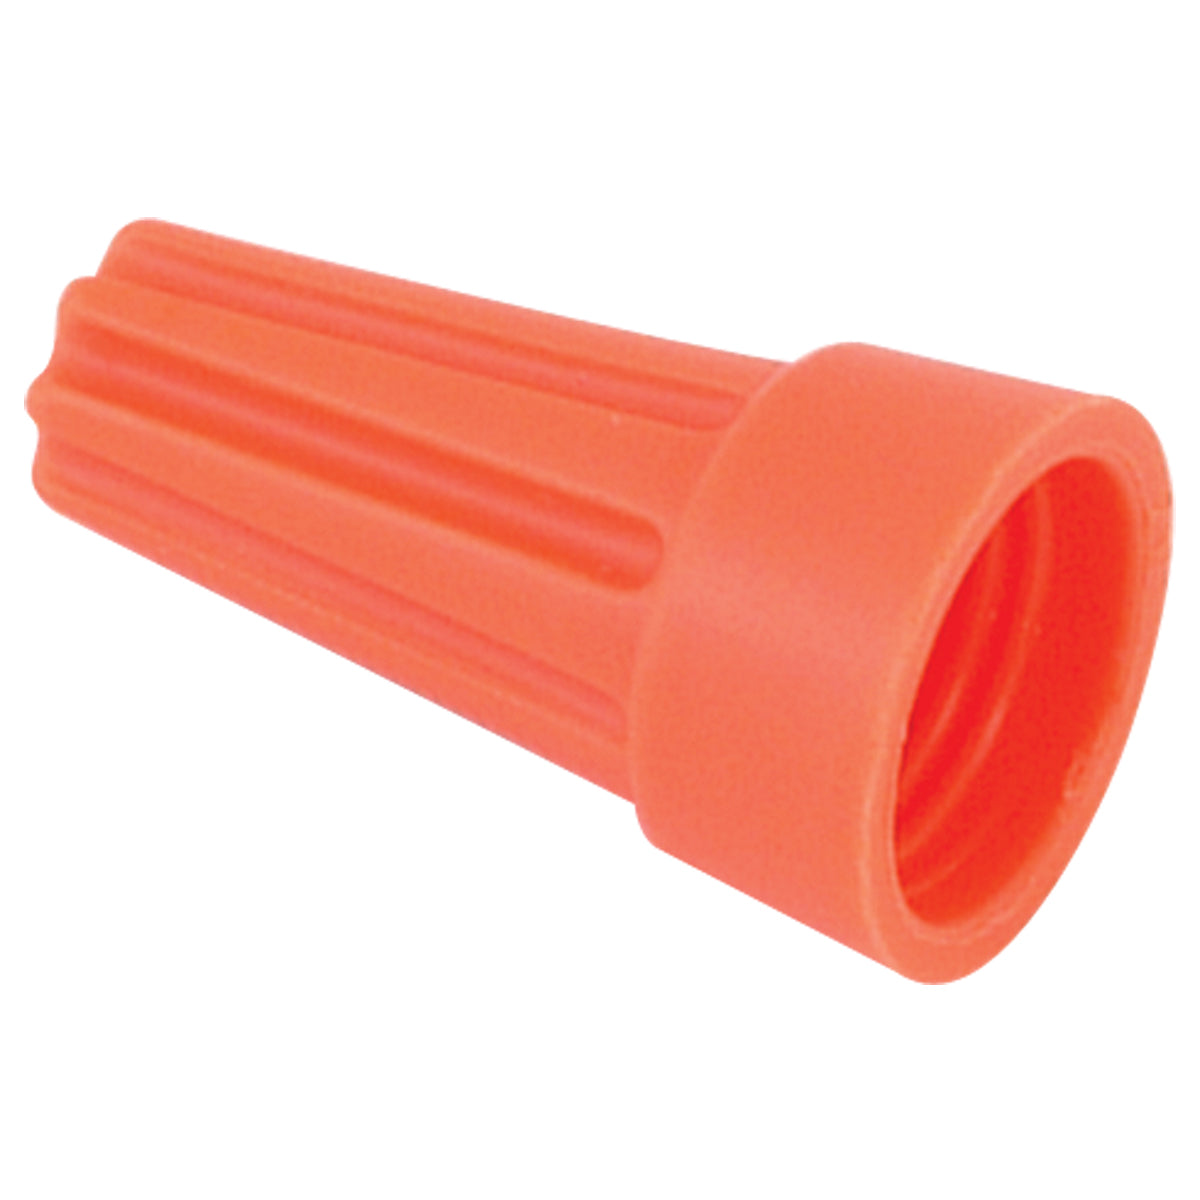 Tuercas para cables de plástico - Tuerca para cables naranja n.º 73B (paquete de 100)